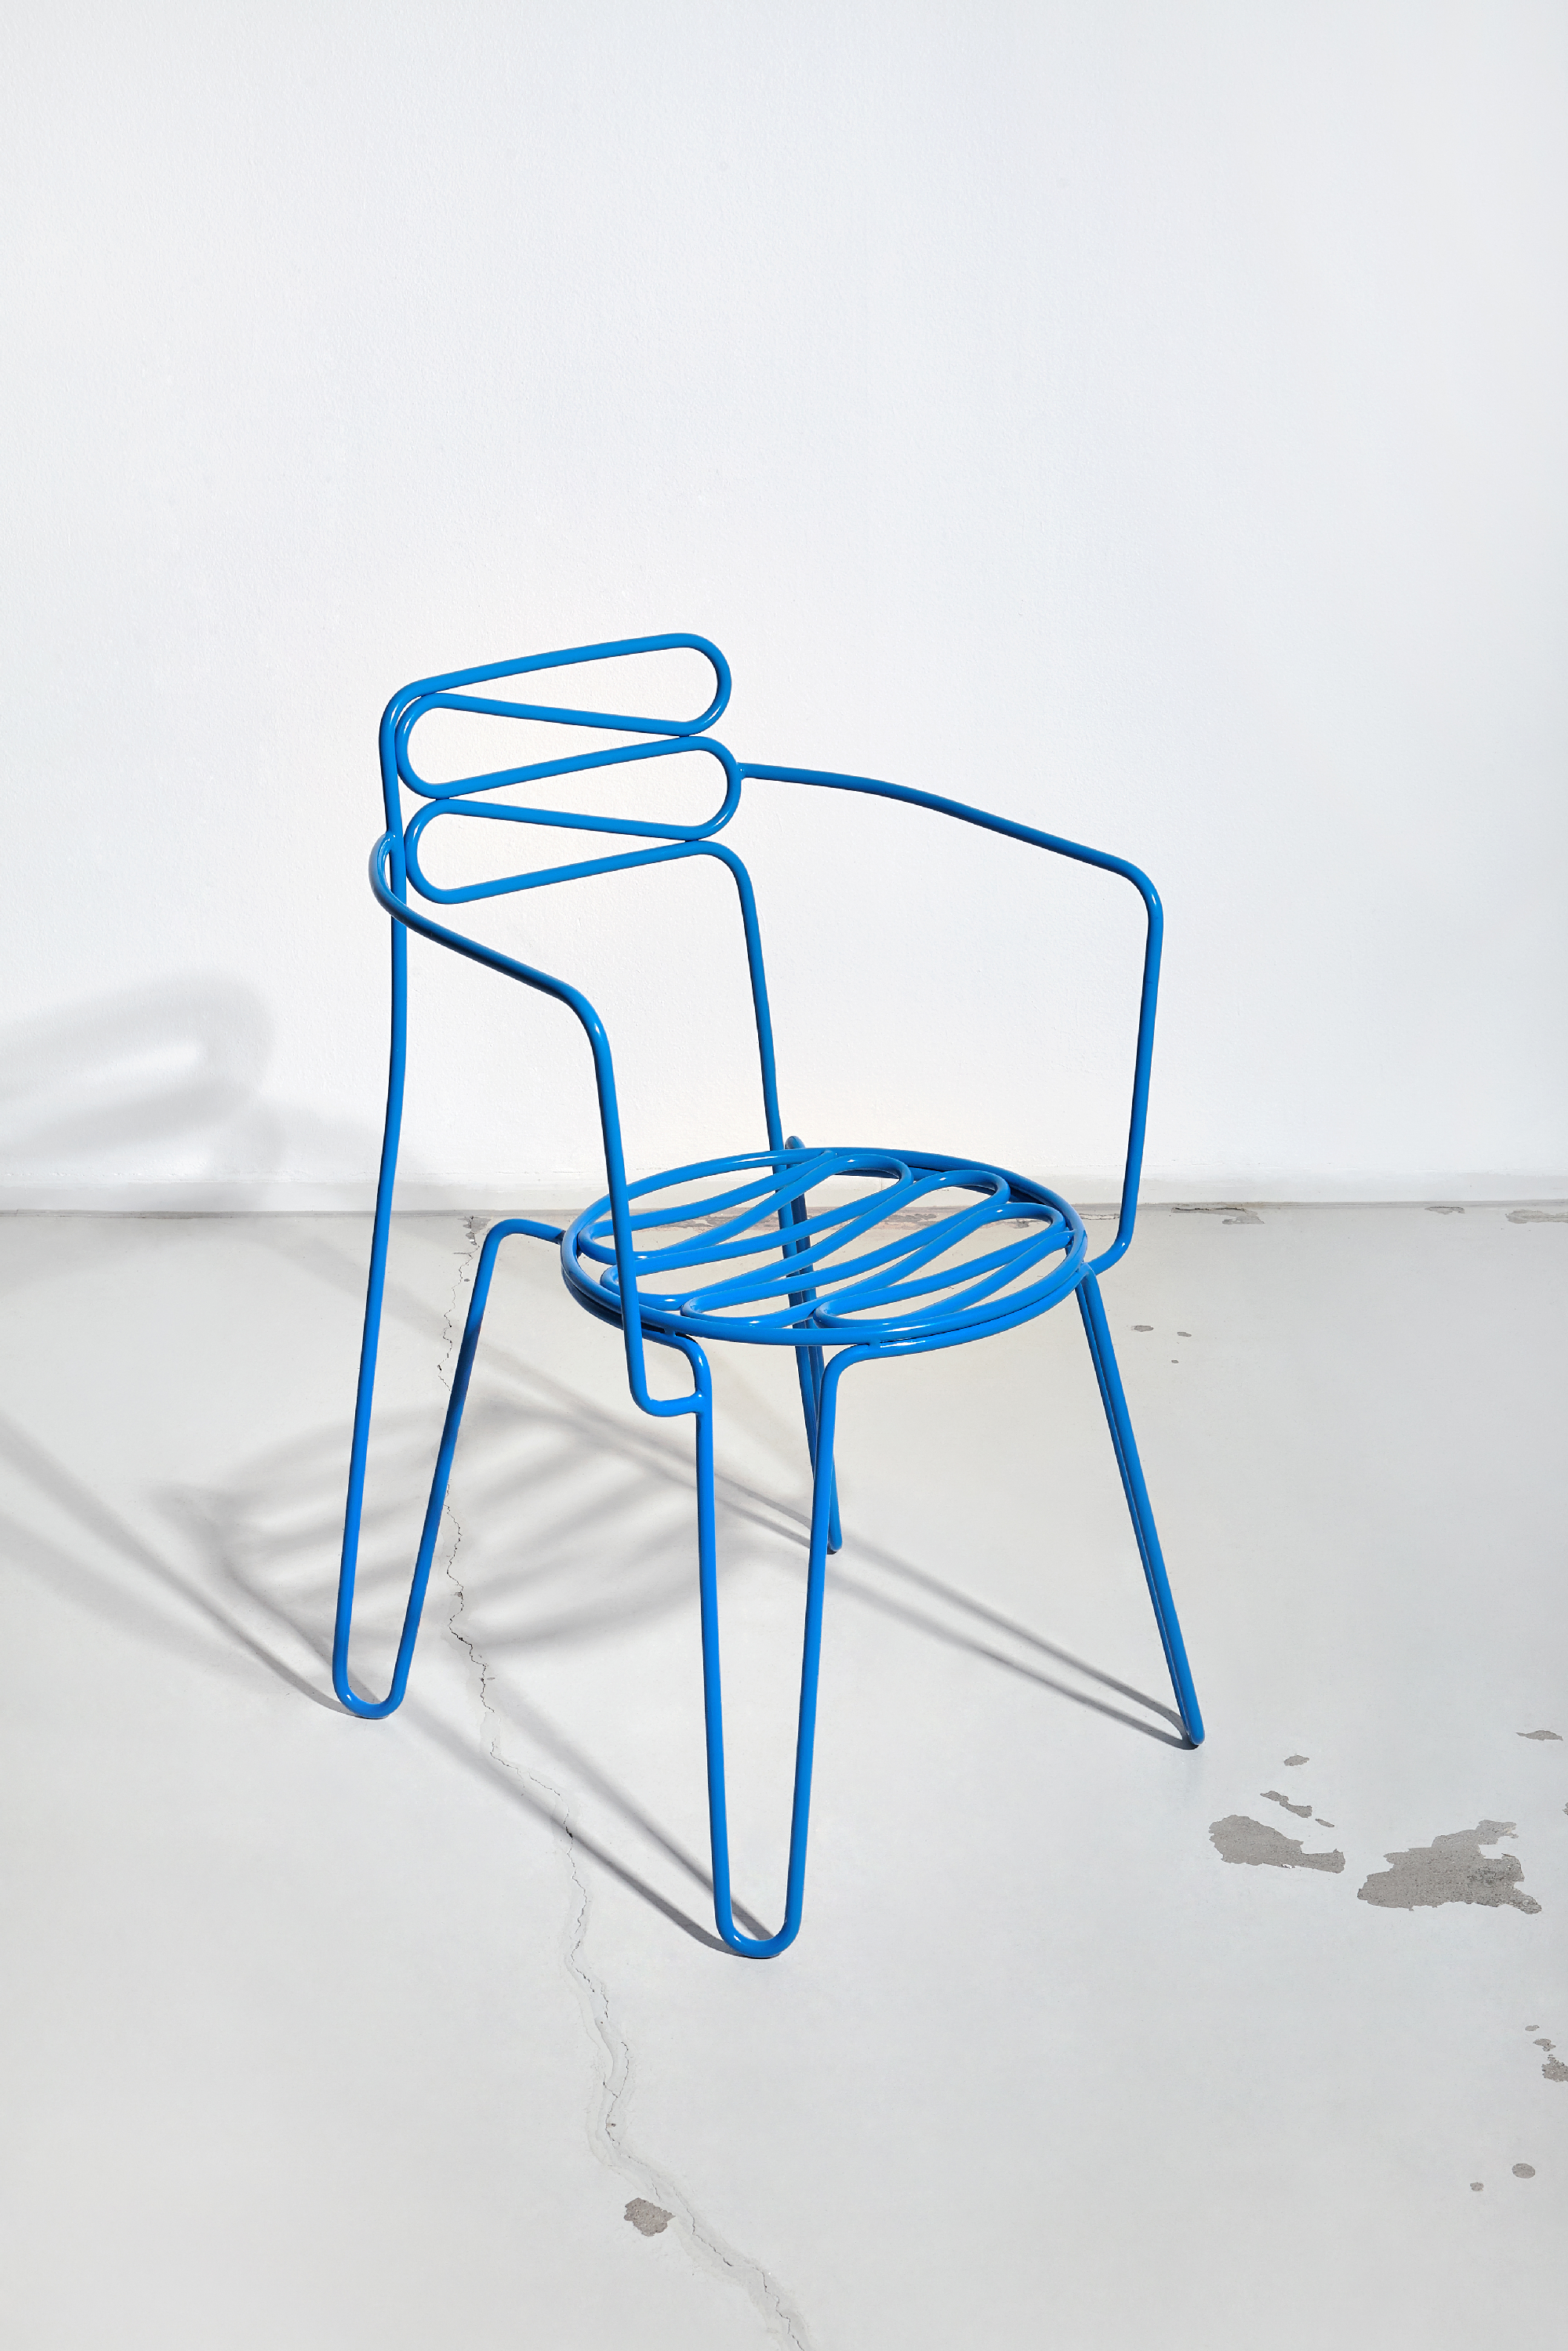 Maria-Jeglinska_The-Little-Black_armchair_©Turczynska-for-Culture-PL_Designalive03